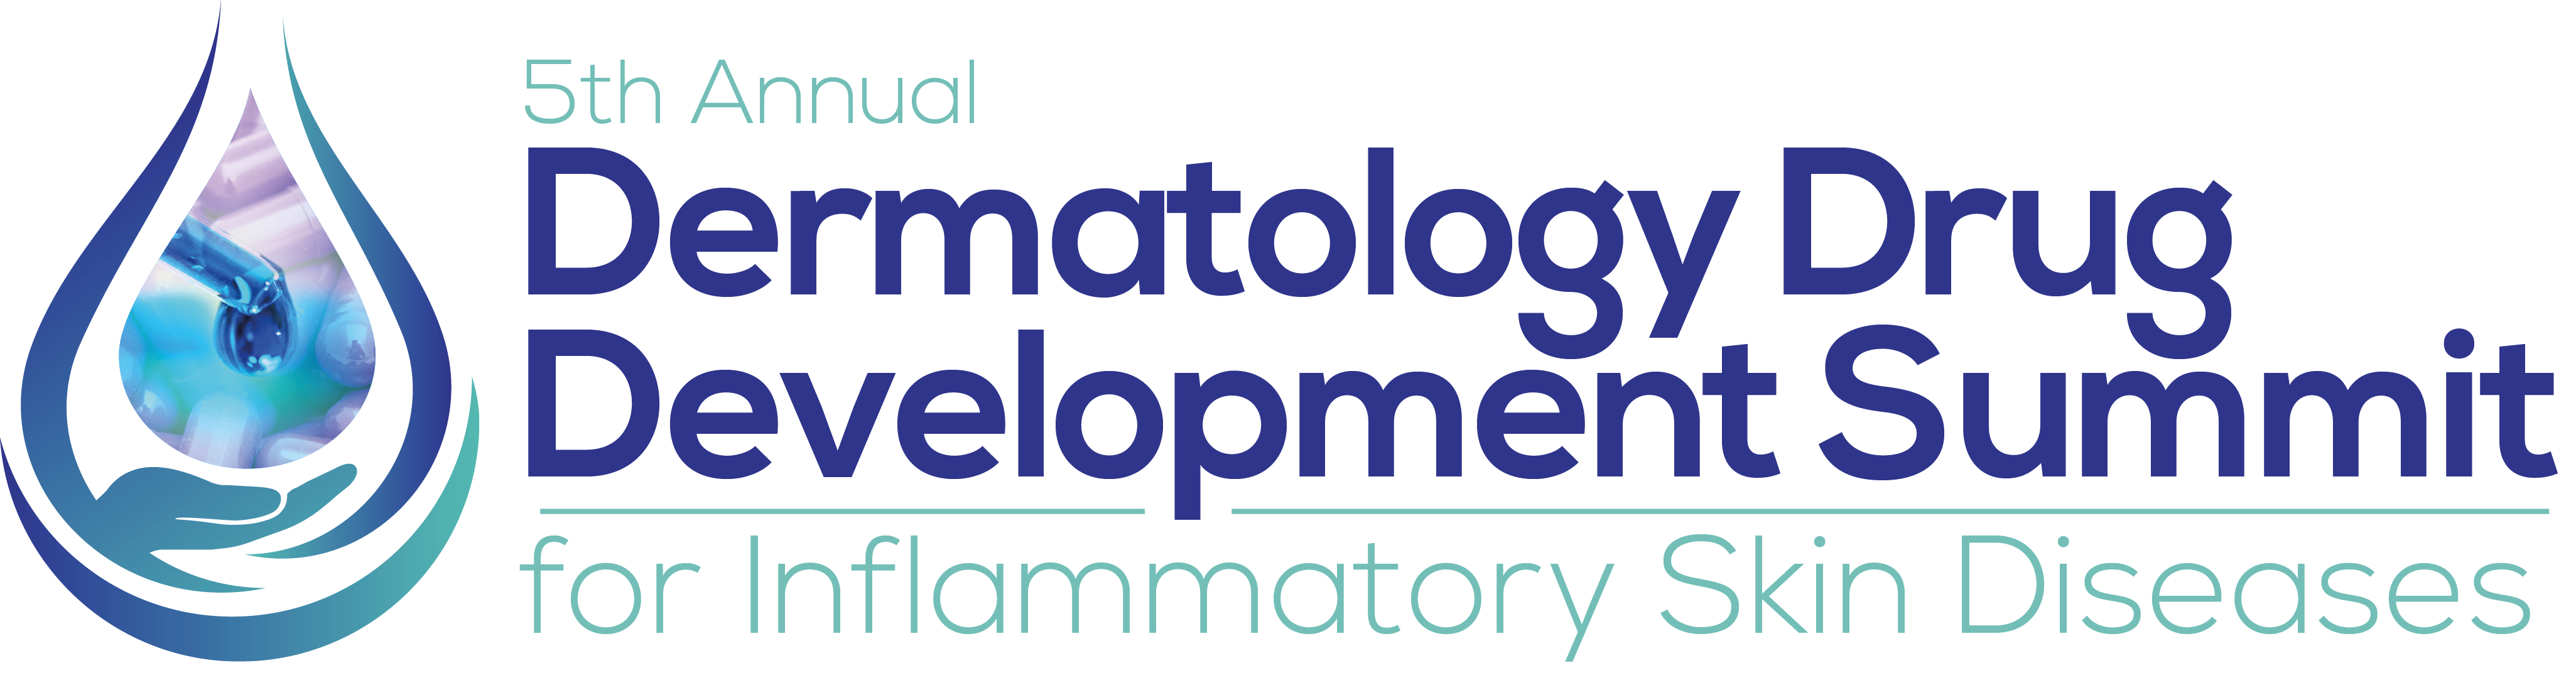 5th Annual Dermatology Drug Development Summit Logo